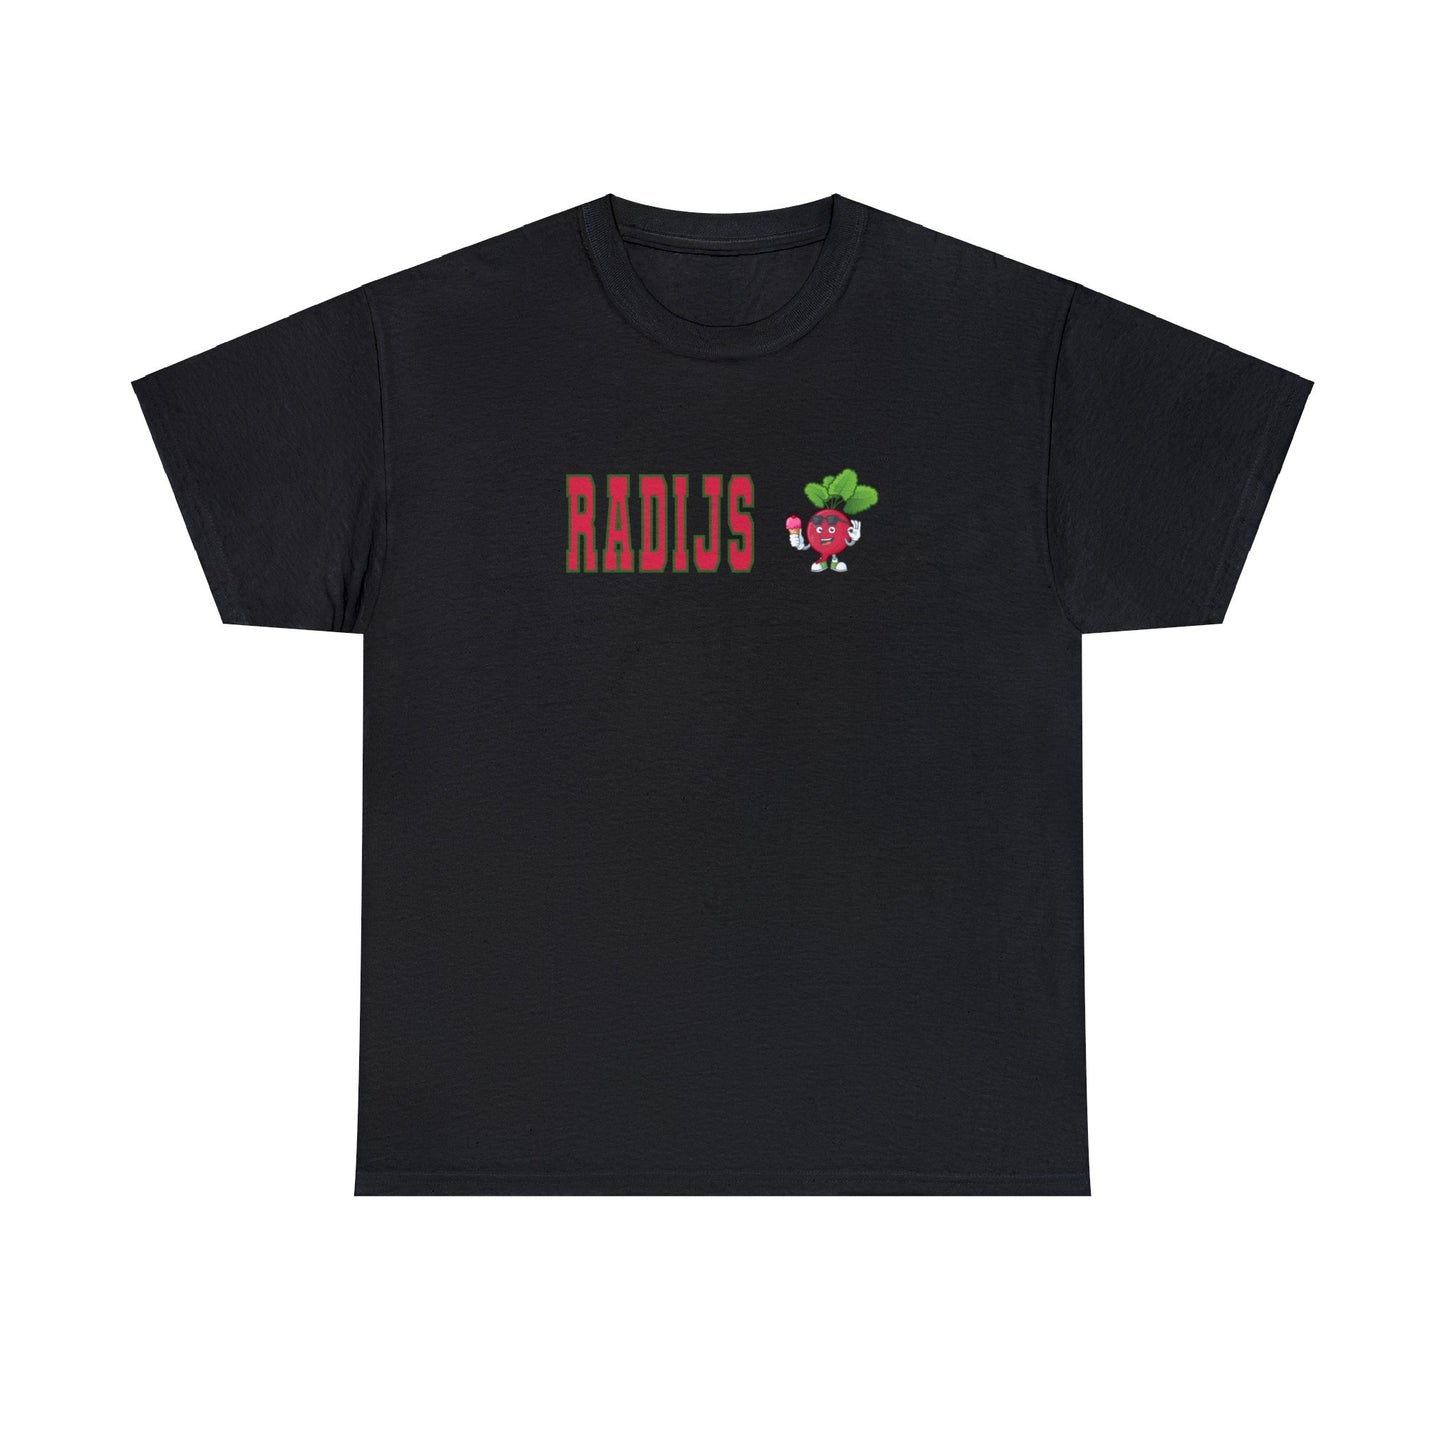 Radijs Concept Tshirt